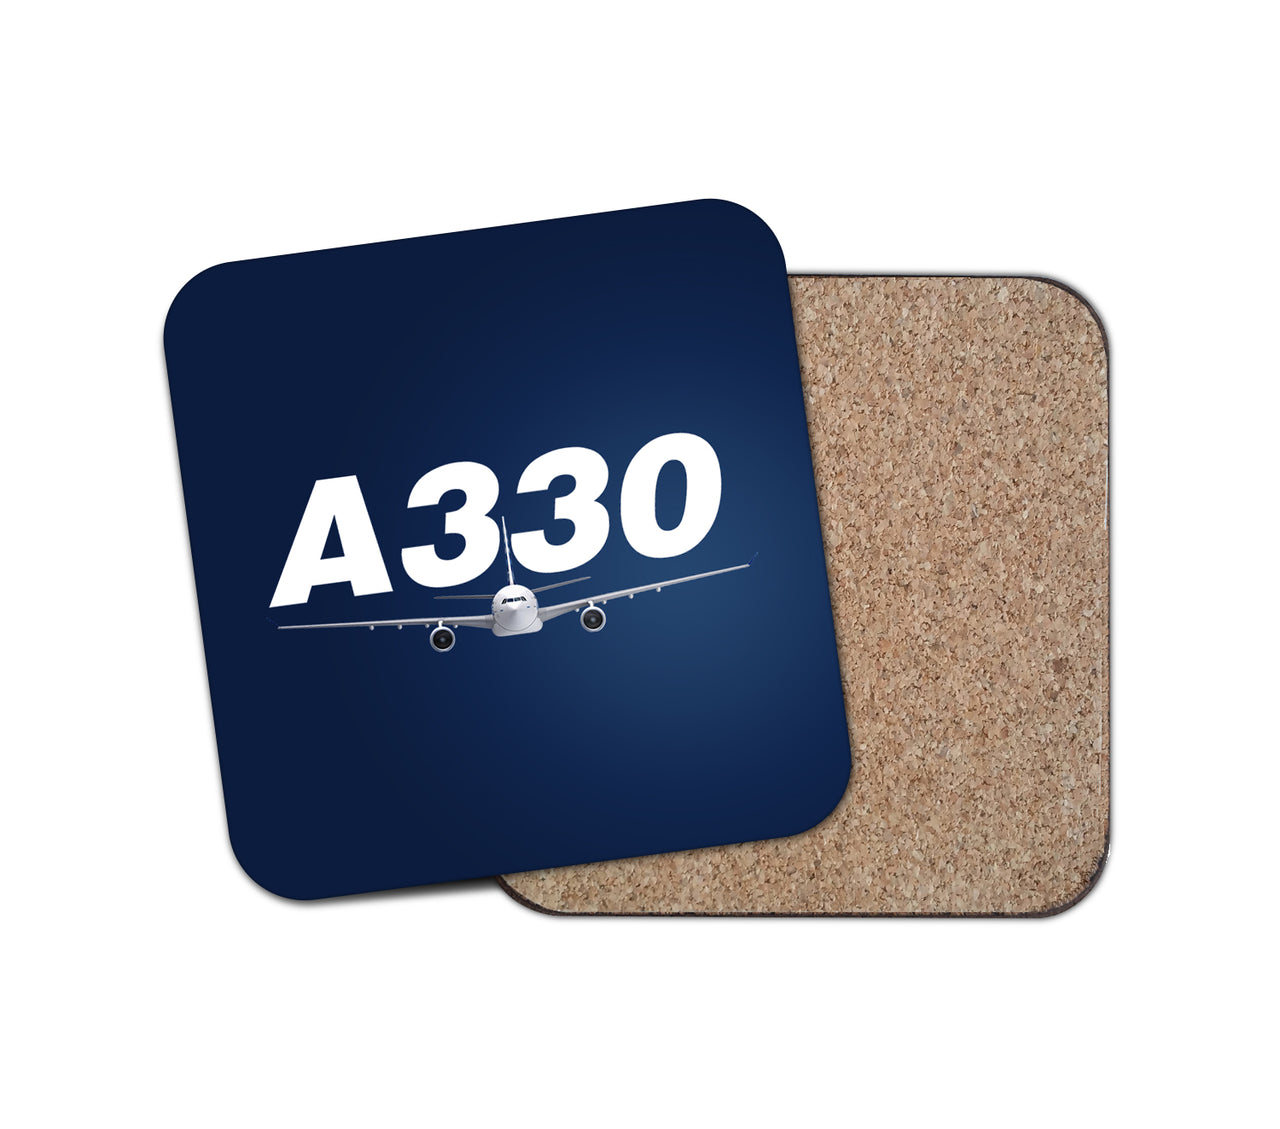 Super Airbus A330 Designed Coasters